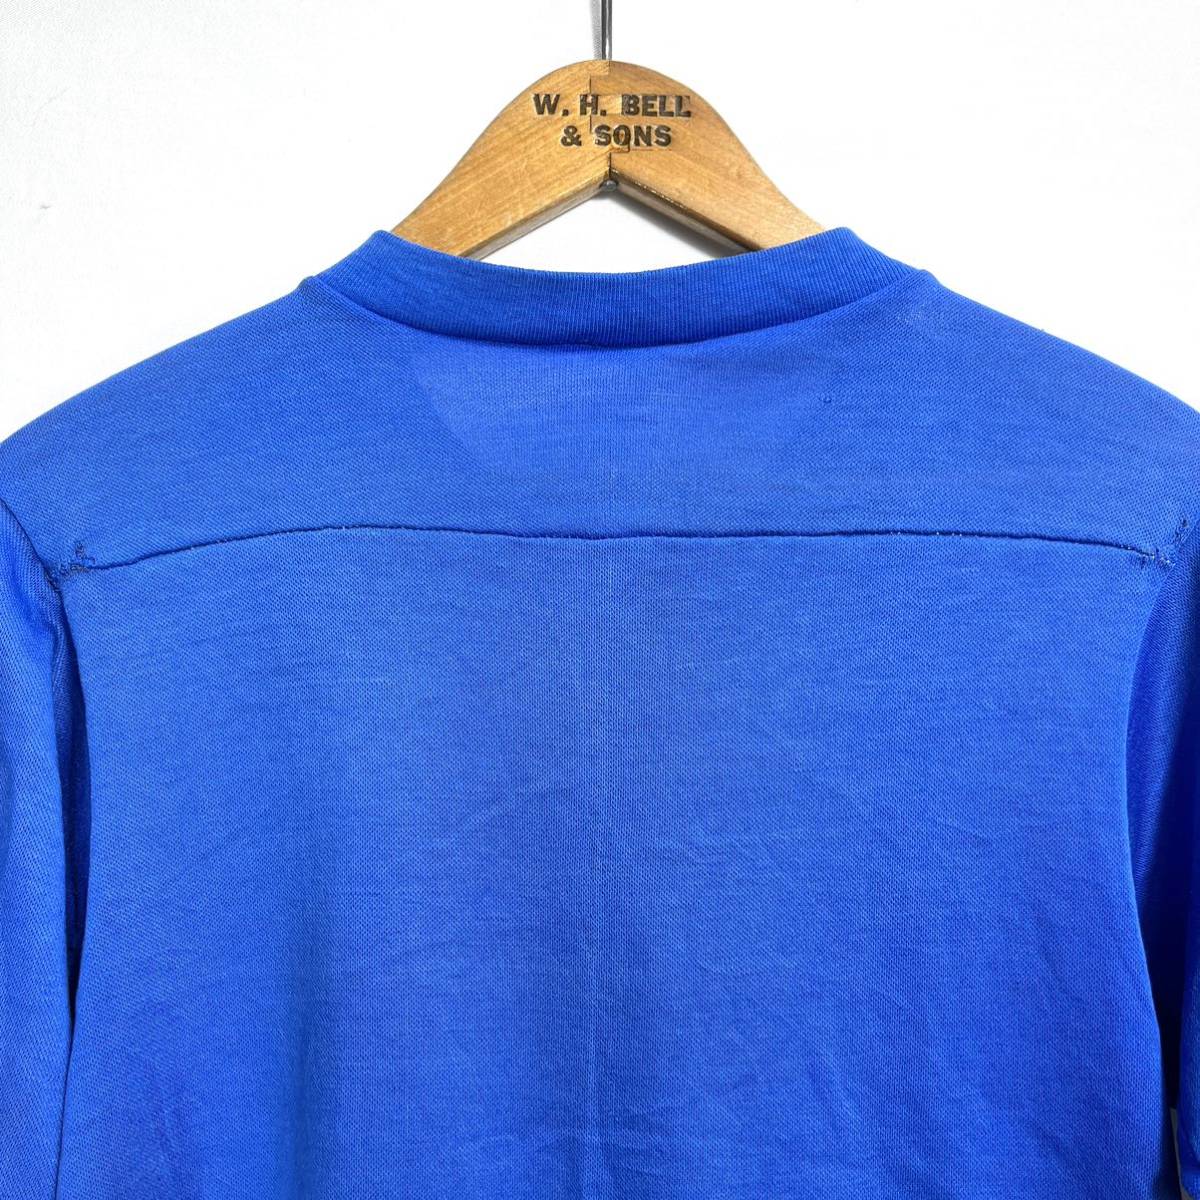 # for children 80s 80 period USA made Vintage ARTEX KANSAS JAYHAWKS 7 minute height football T-shirt blue college american football Kids American Casual #